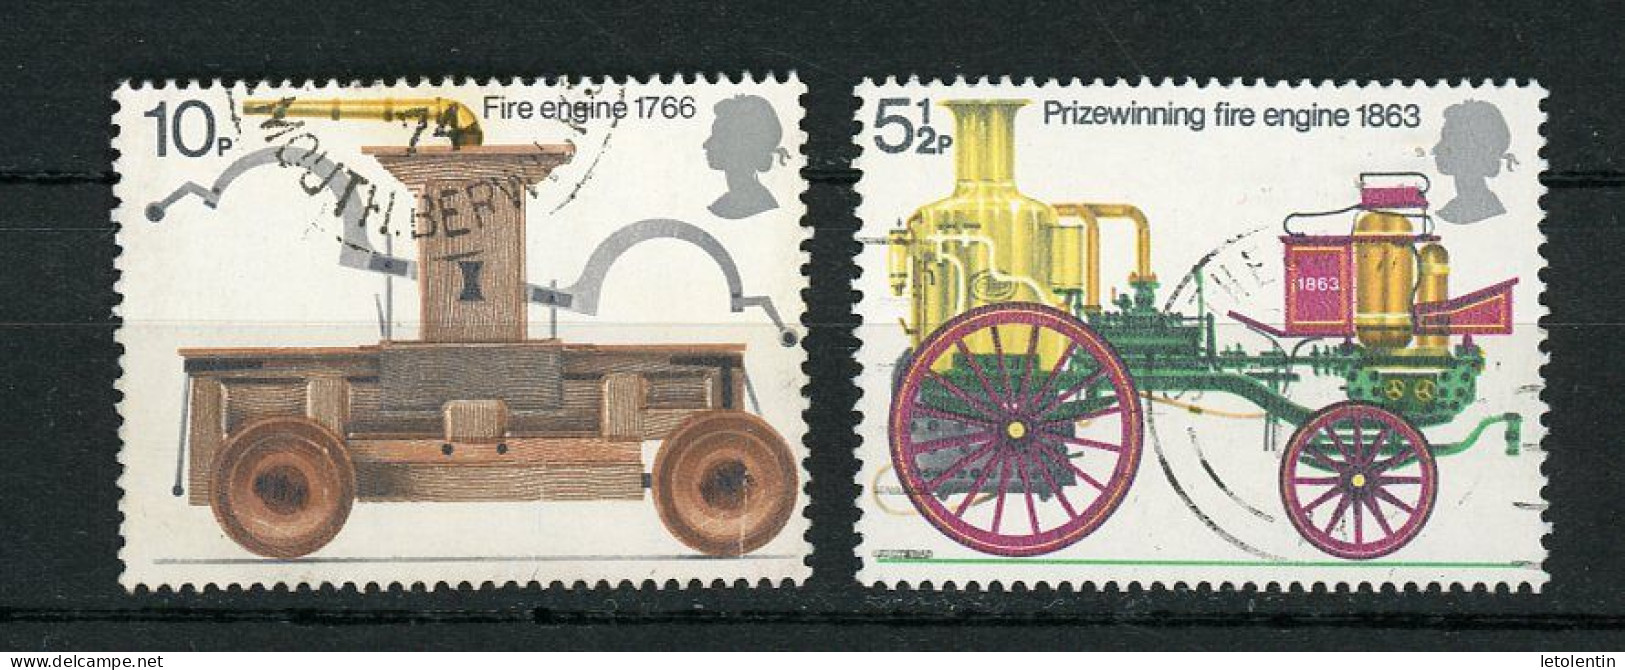 GRANDE BRETAGNE - VEHICULES DE POMPIERS - N° Yvert 722+724 Obli - Used Stamps